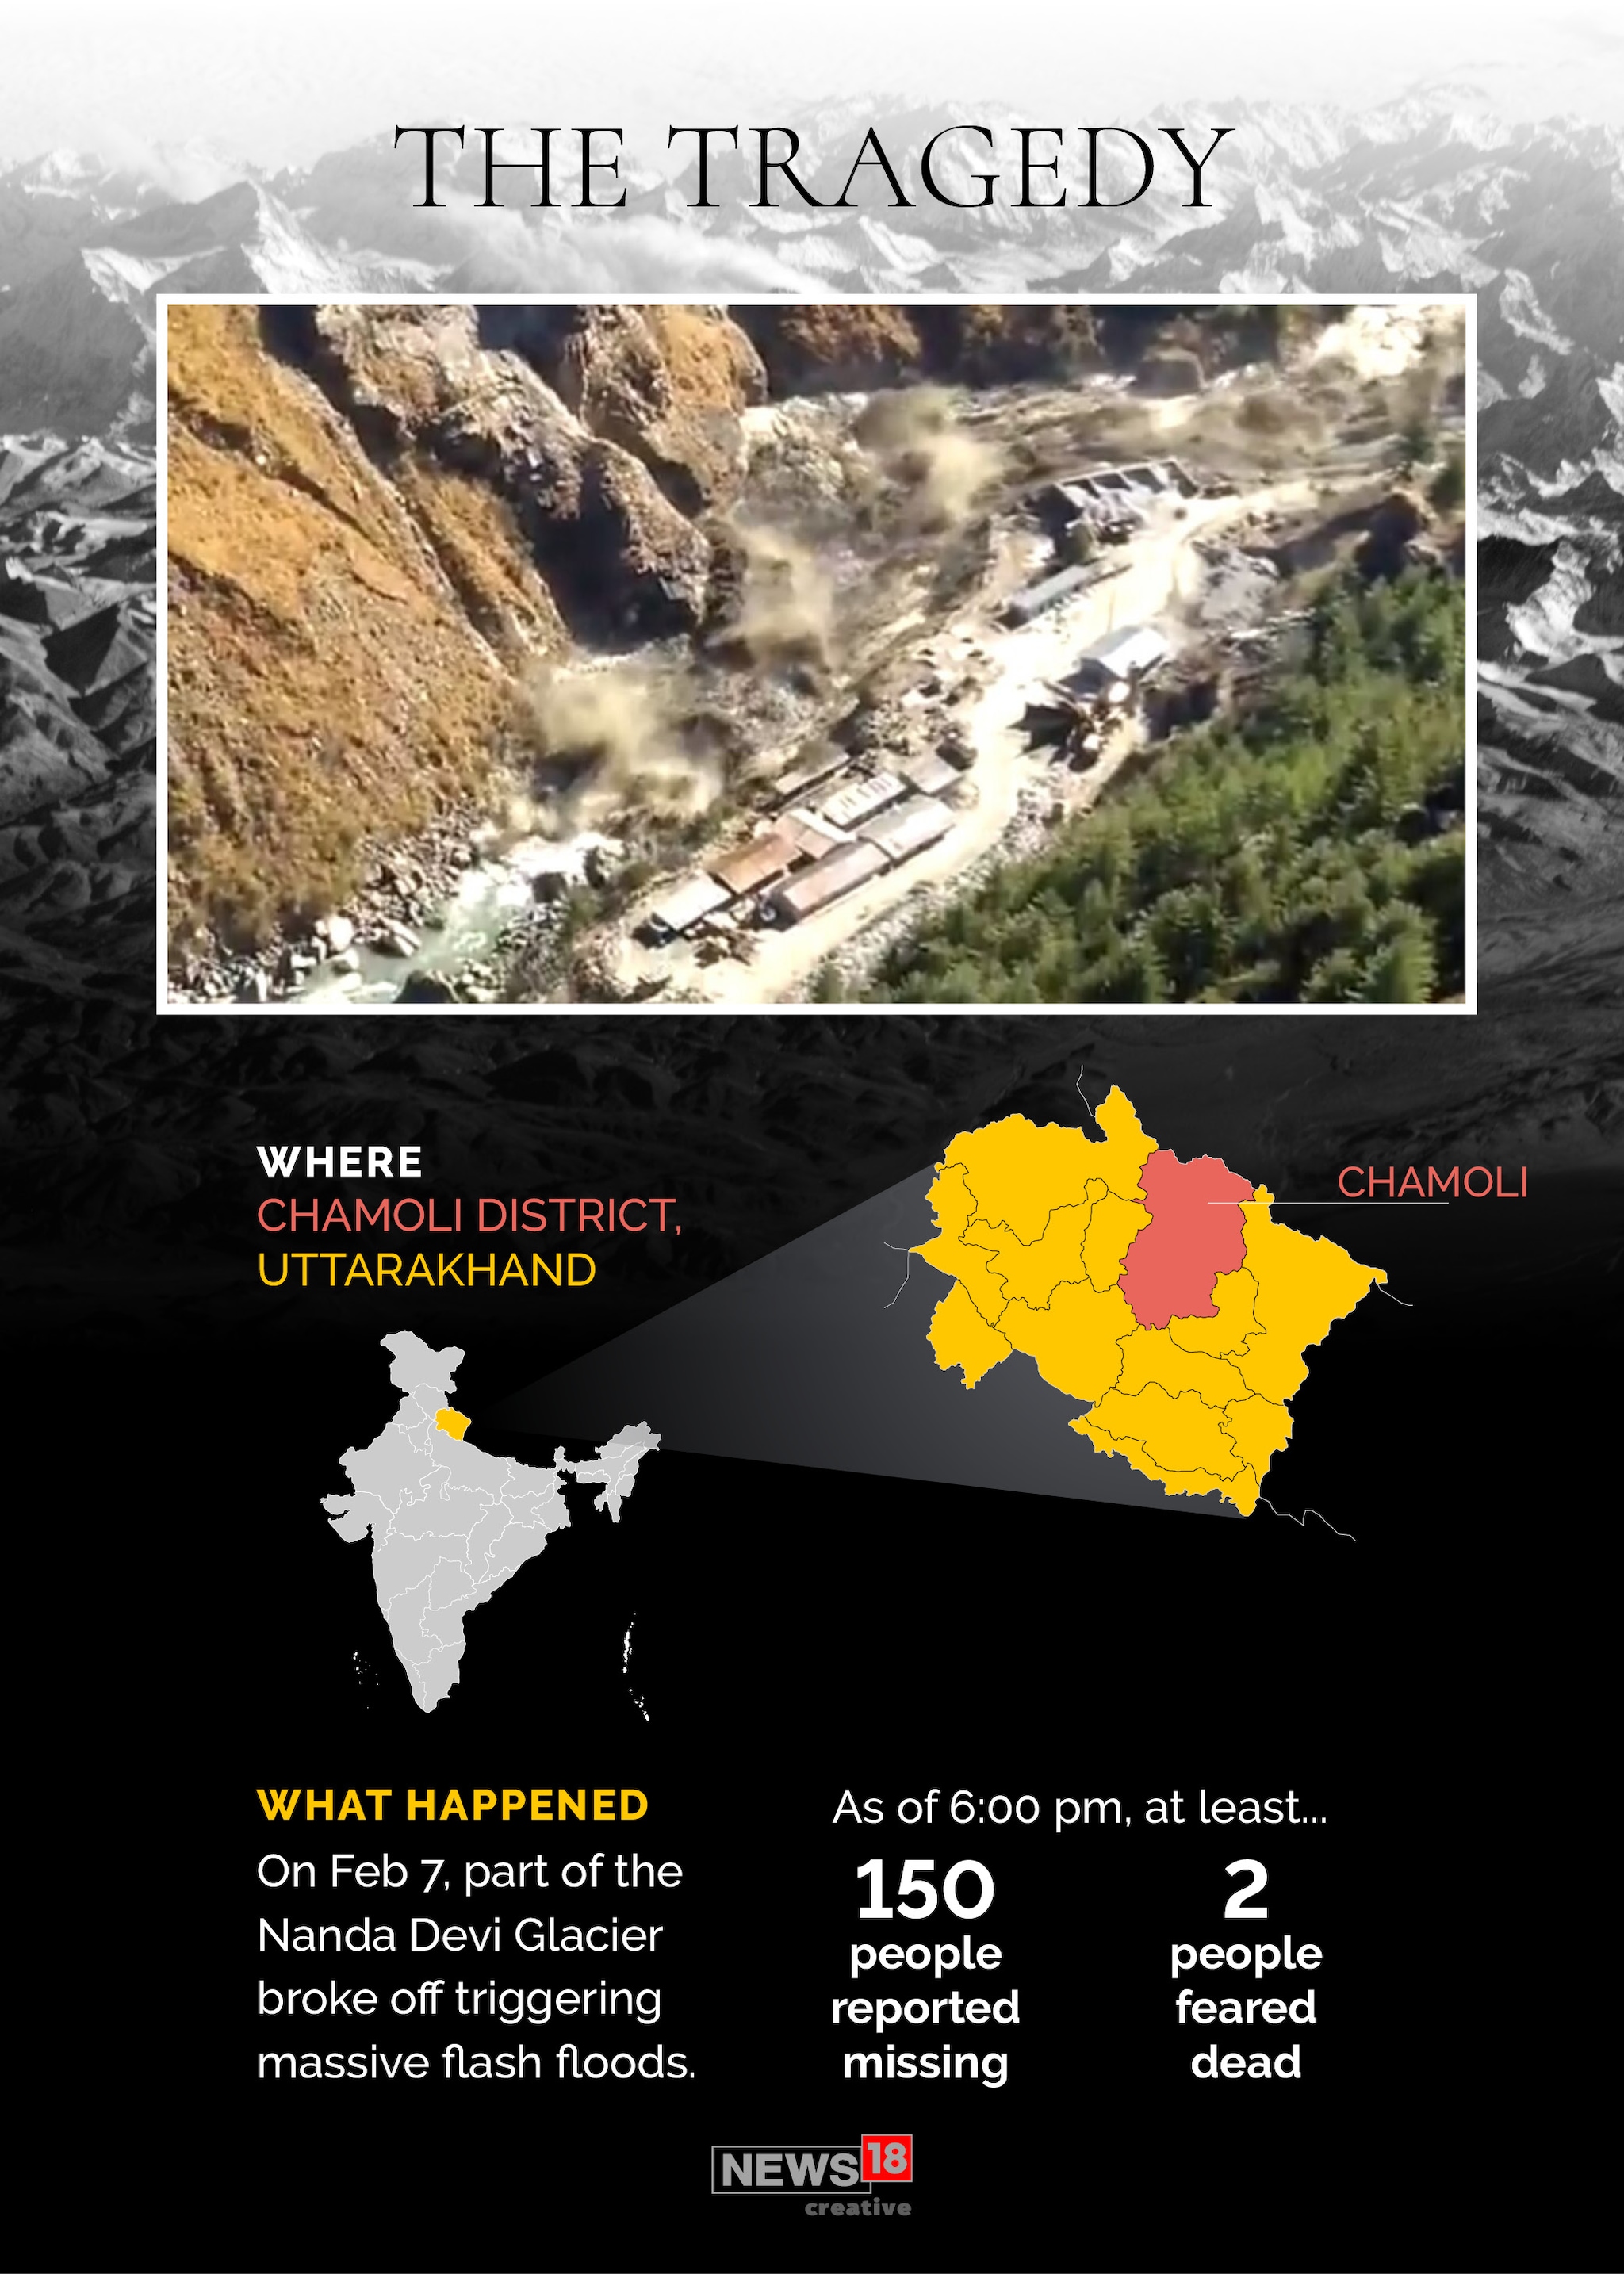 uttarakhand flood case study pdf